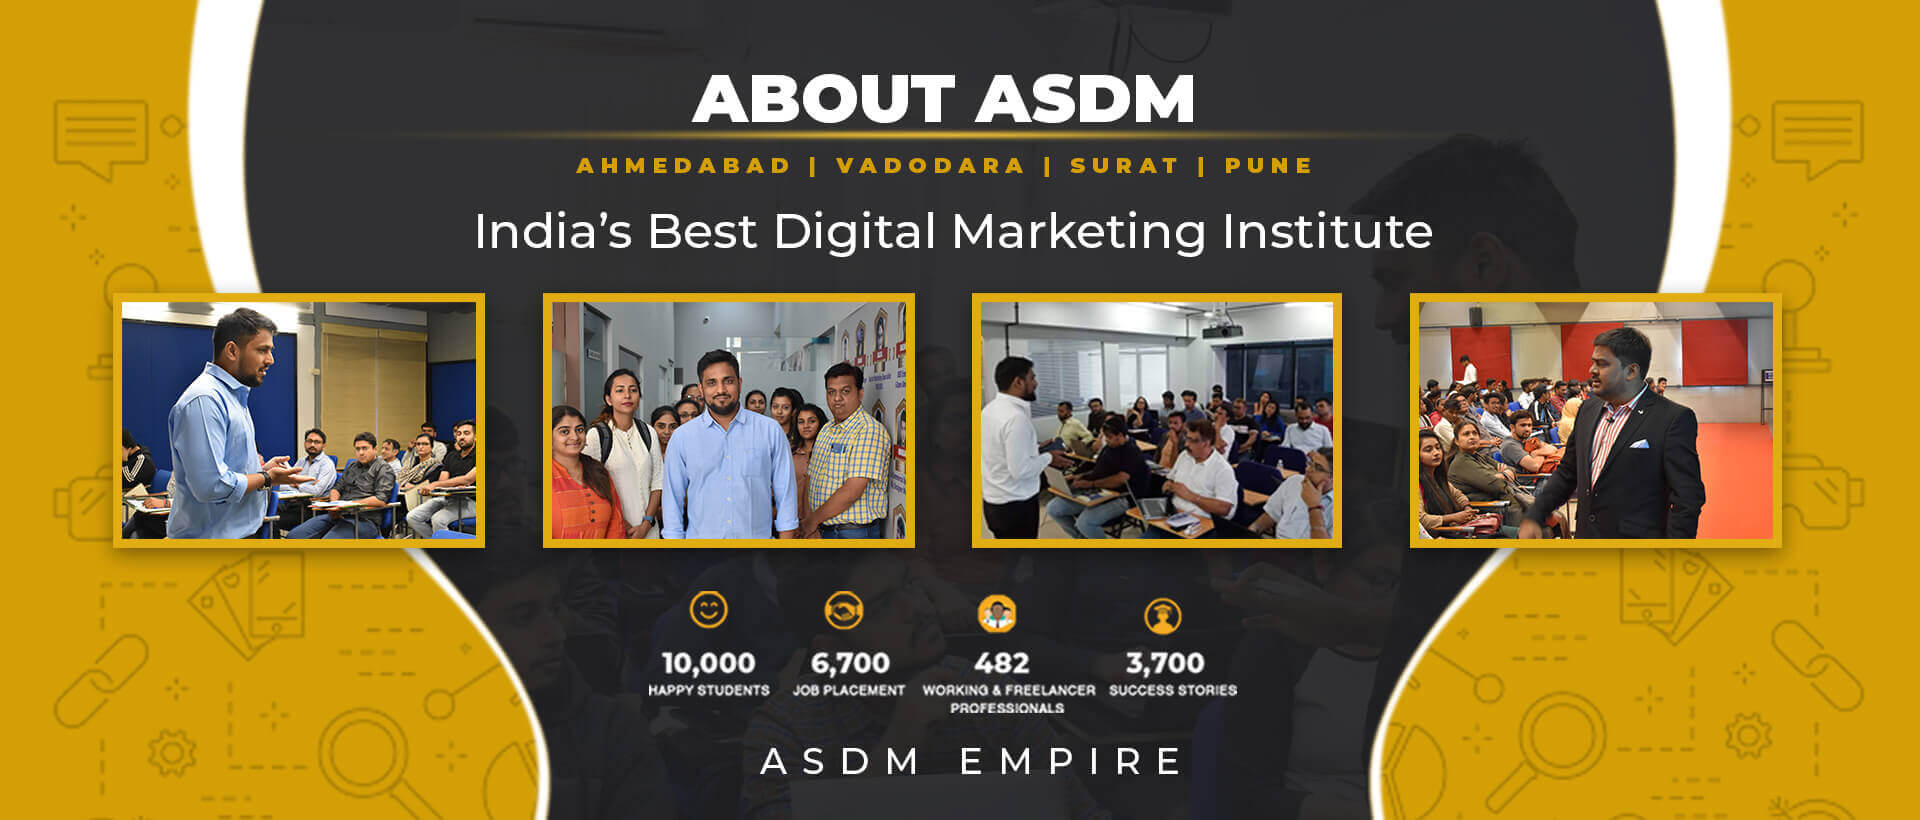 ABOUT ASDM

AHMEDABAD | VADODARA | SURAT | PUNE

   

India’s Best Digital Marketing Institute

10,000 6,700 [2:7 EN [1

MAPPY STUDENTS JOB PLACEMENT WORKING & FREELANCER SUCCESS STORIES
PROFESSIONALS

ASDM EMPIRE